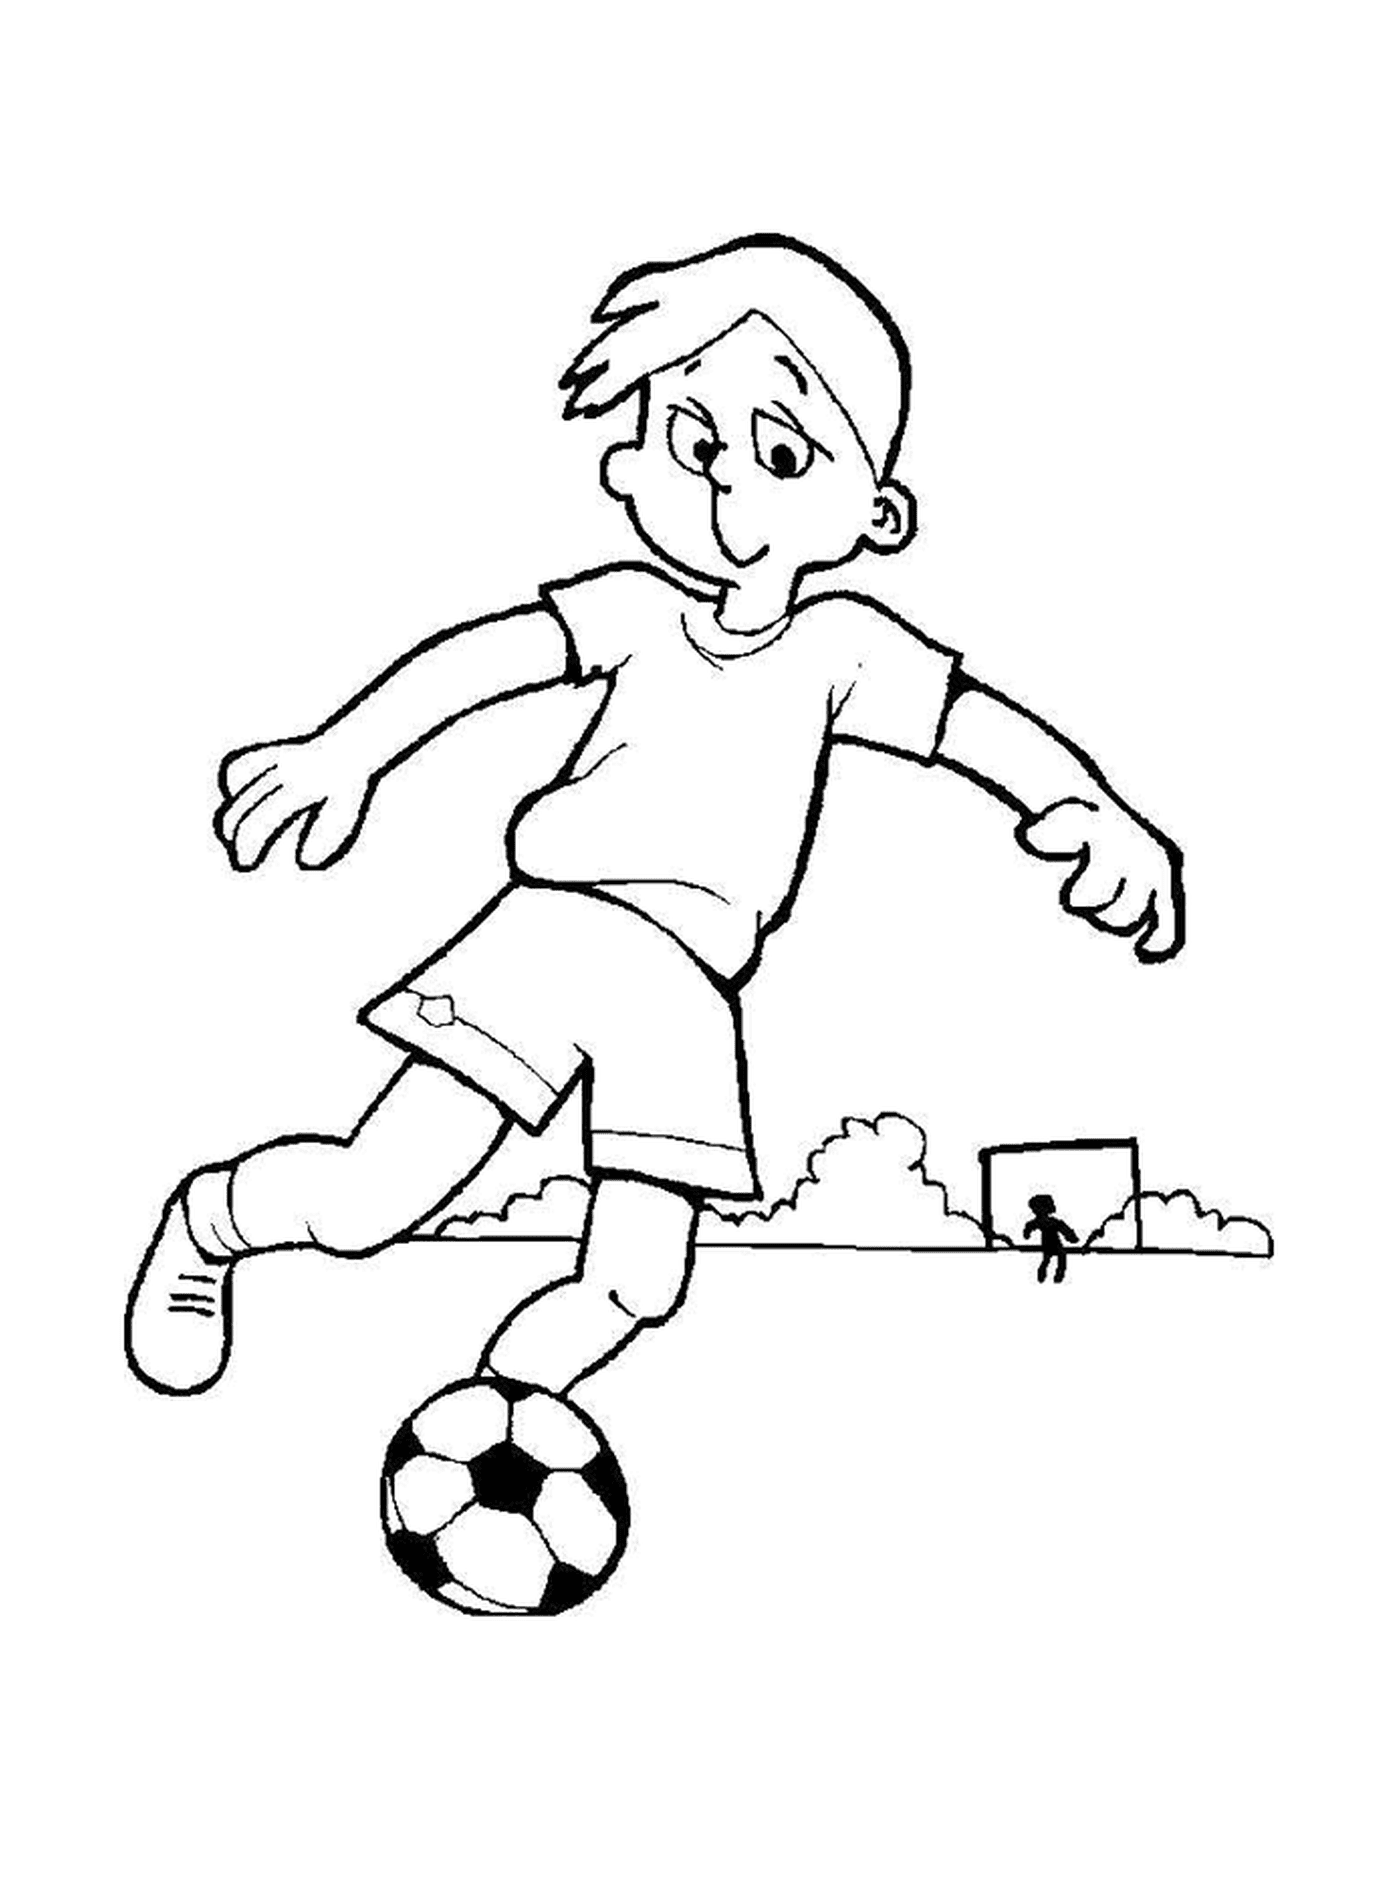  A kid playing football 